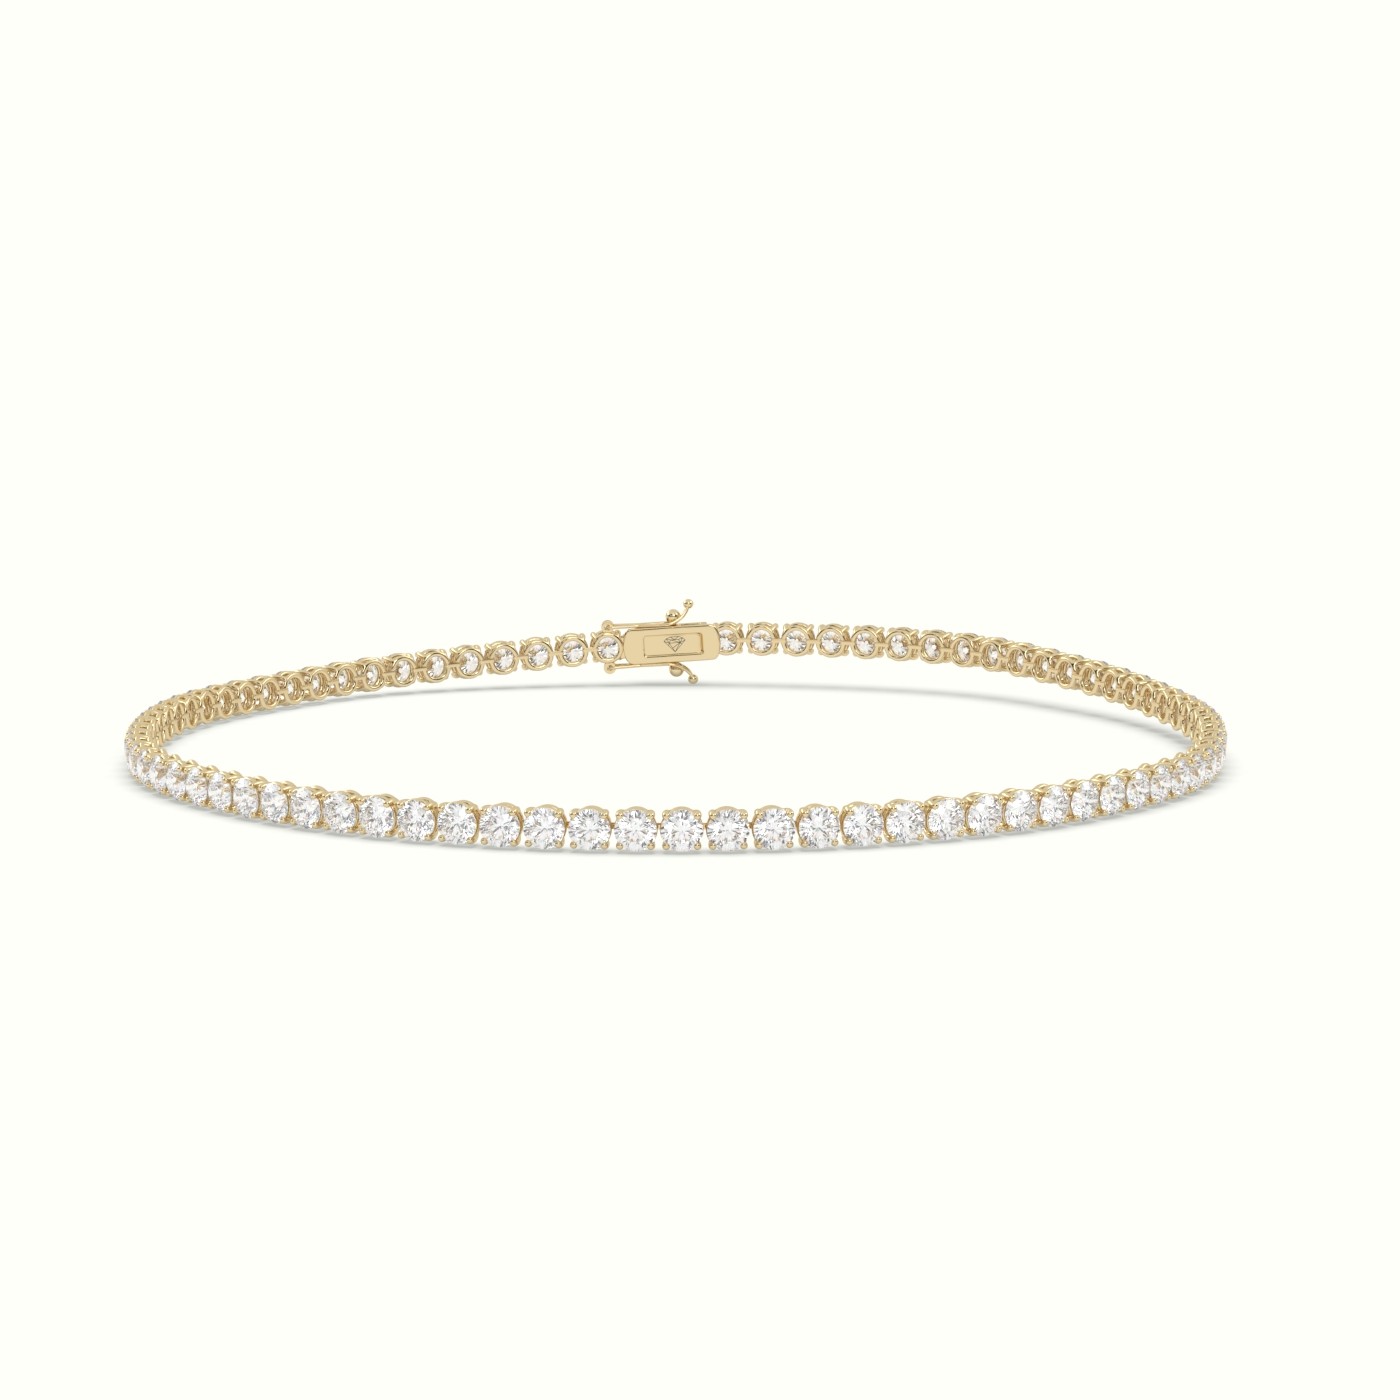 18k yellow gold tennis bracelet 2.49 carat diamonds